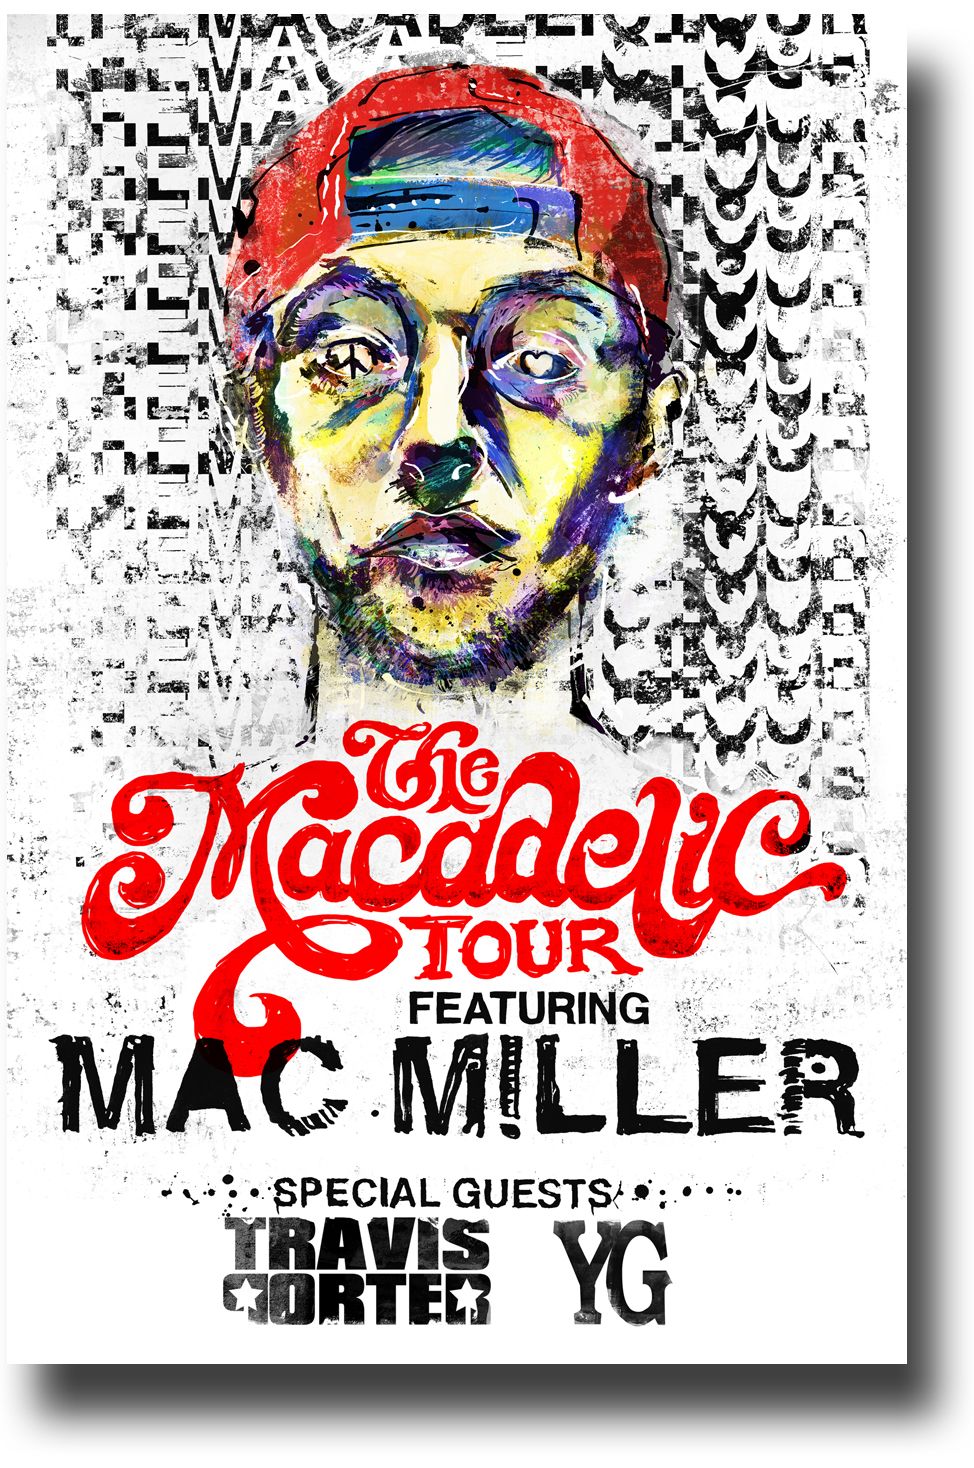 Mac miller album download free